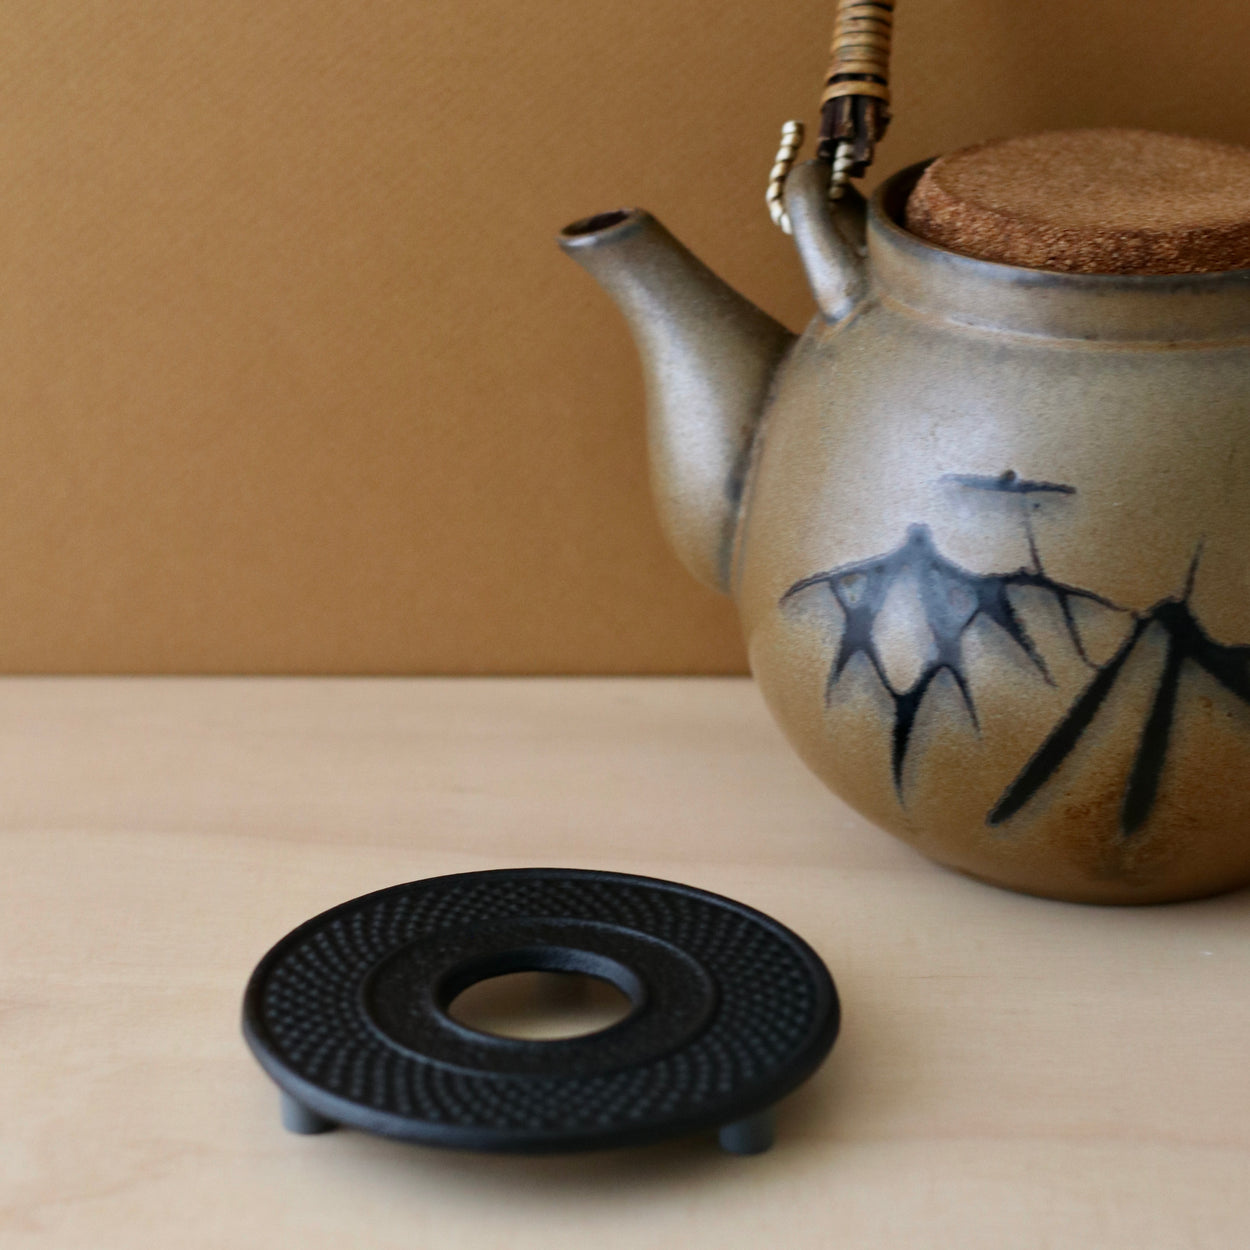 Nambu tetsuki small Japanese iron pot stand with ceramic teapot